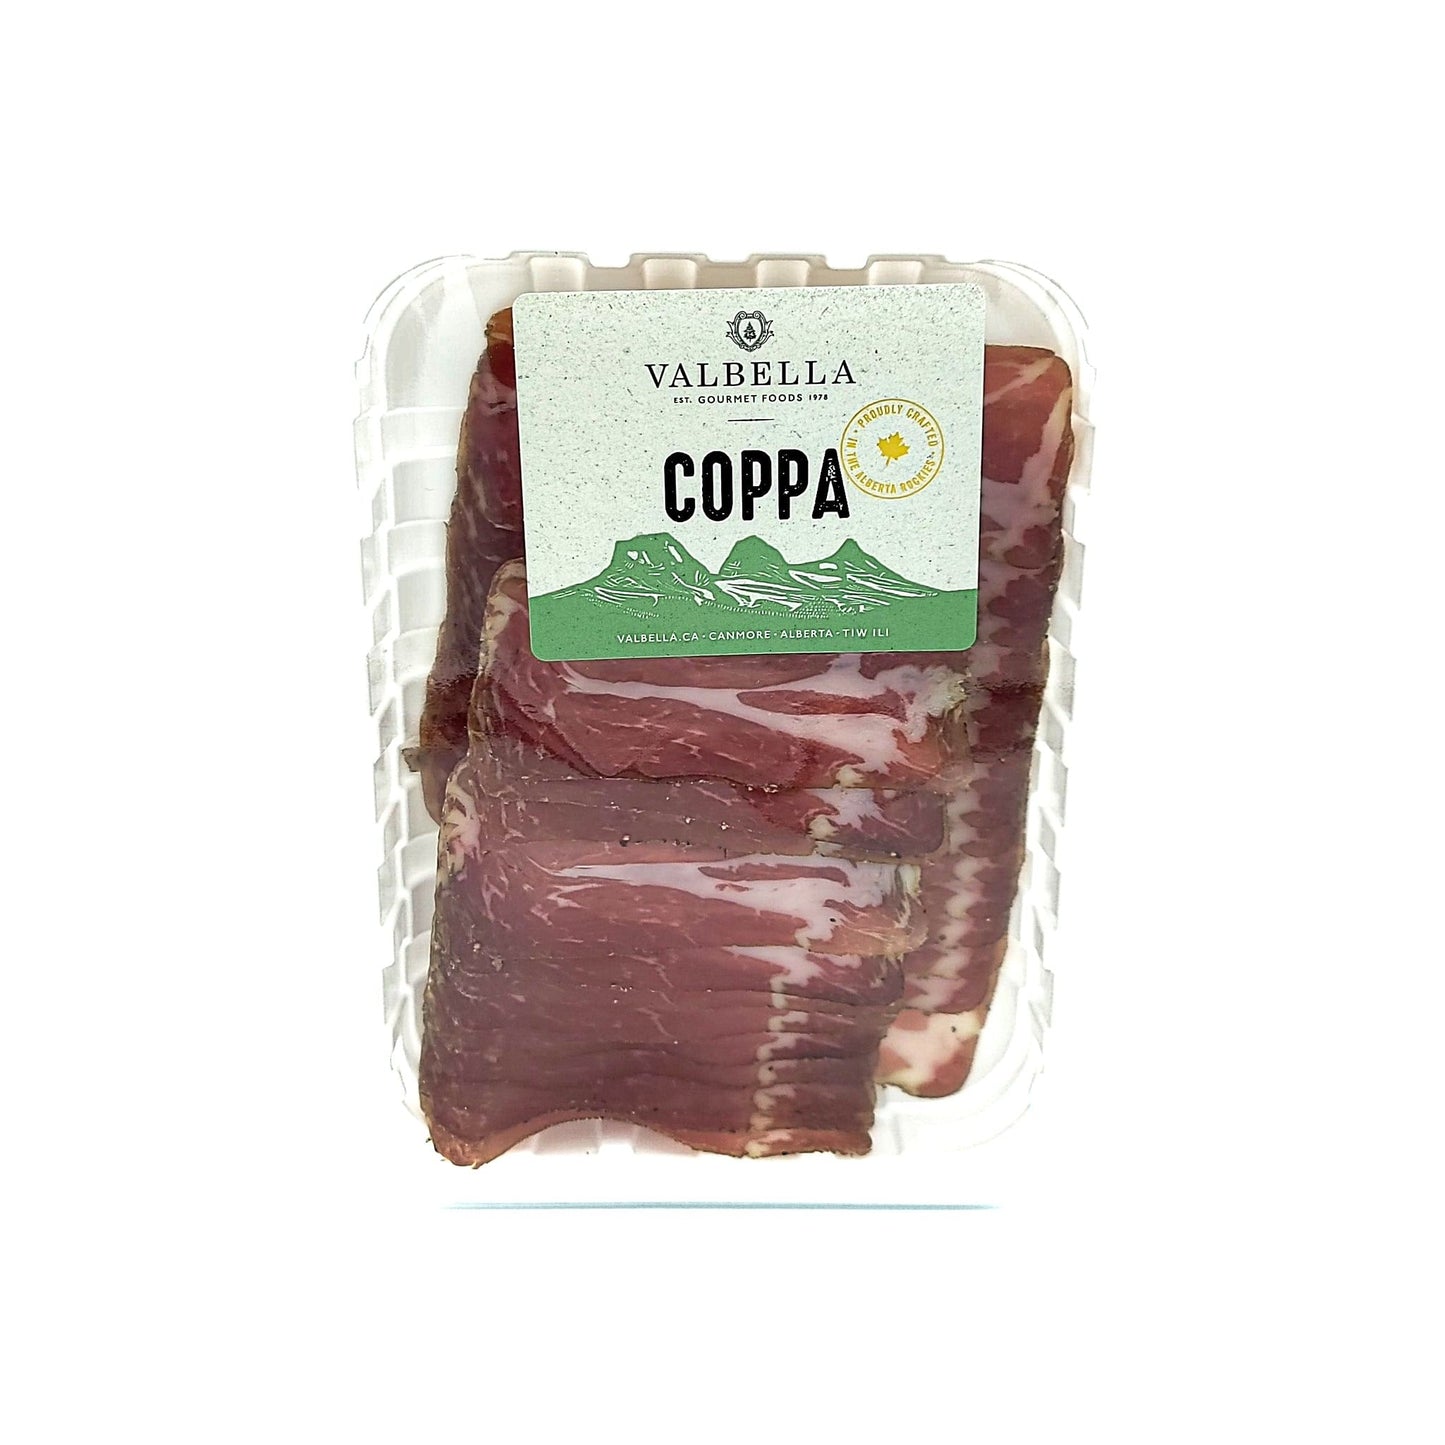 Coppa ~200g - Valbella Gourmet Foods